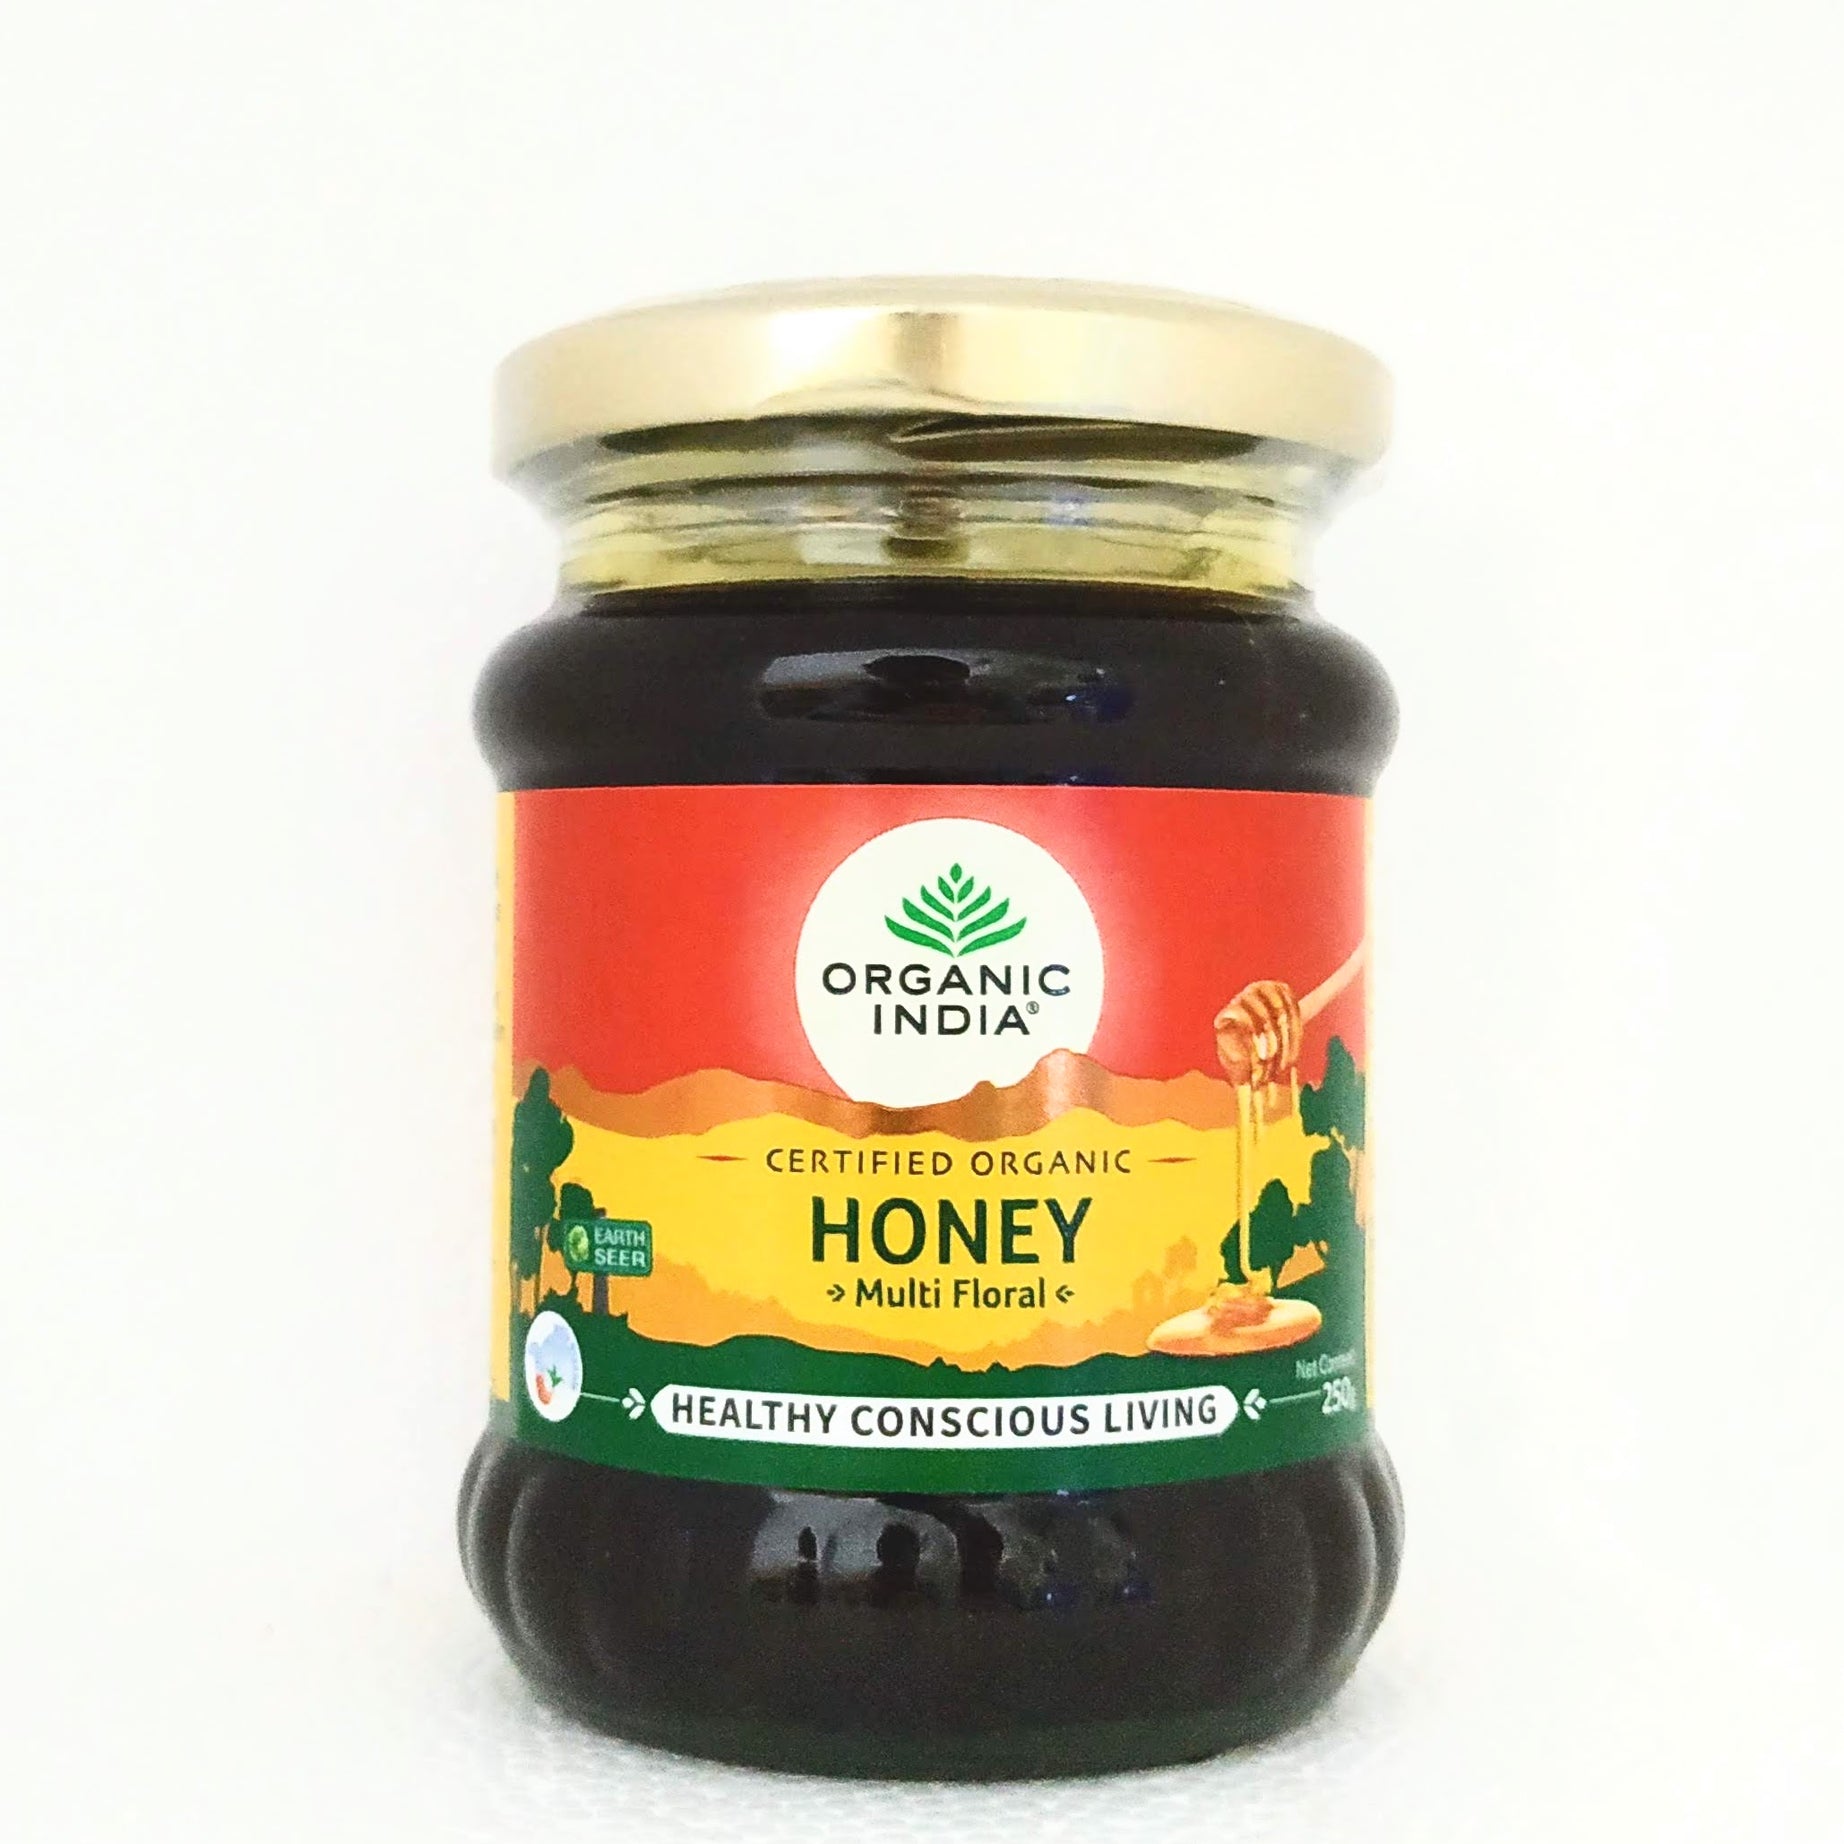 Shop Organic India Honey 250gm at price 195.00 from Organic India Online - Ayush Care